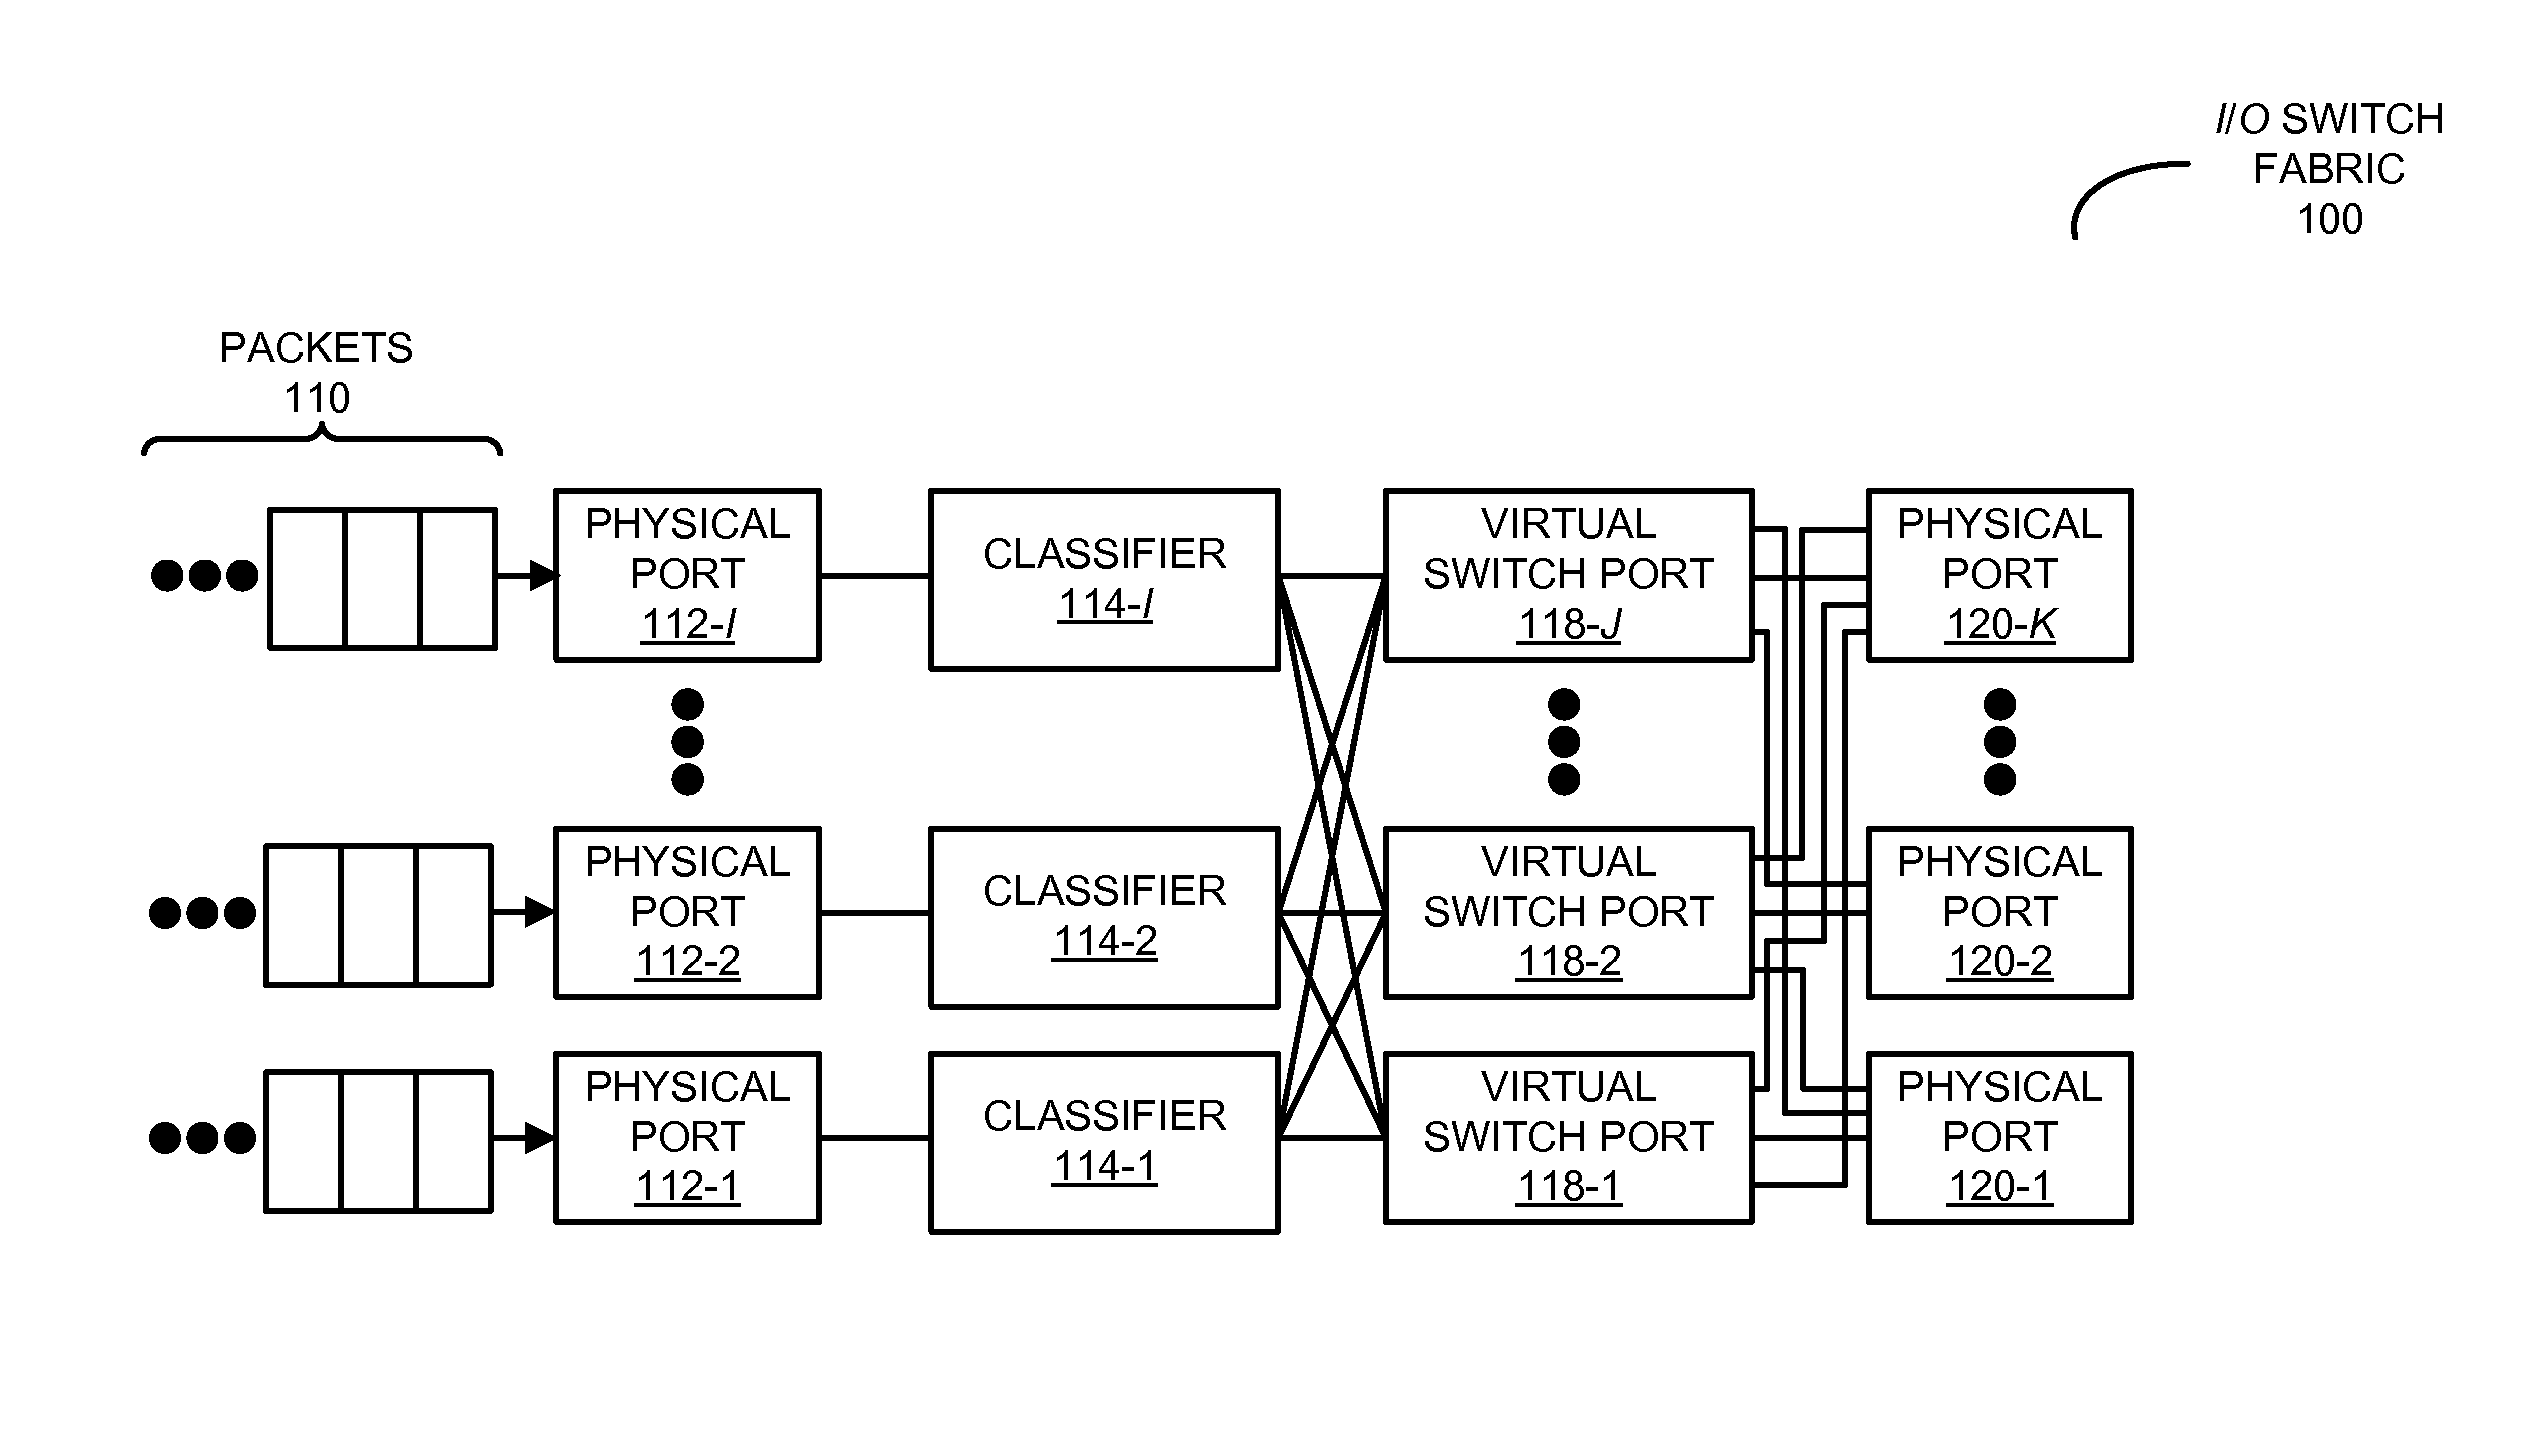 Virtual-port network switch fabric